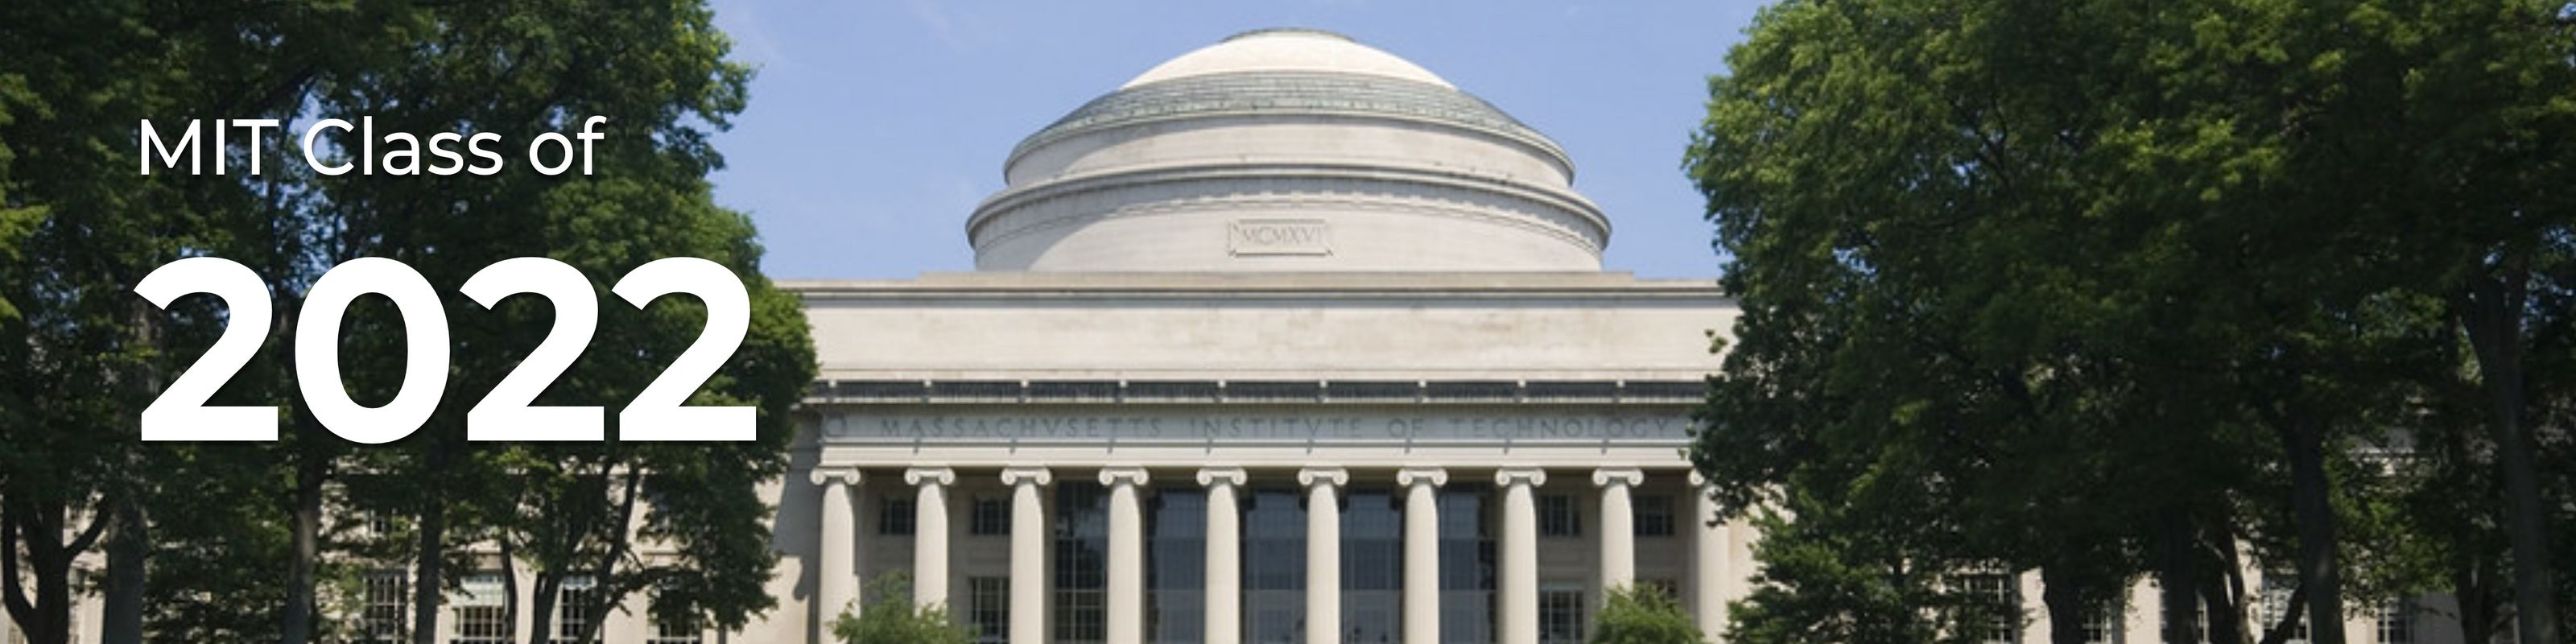 MIT Class of 2022